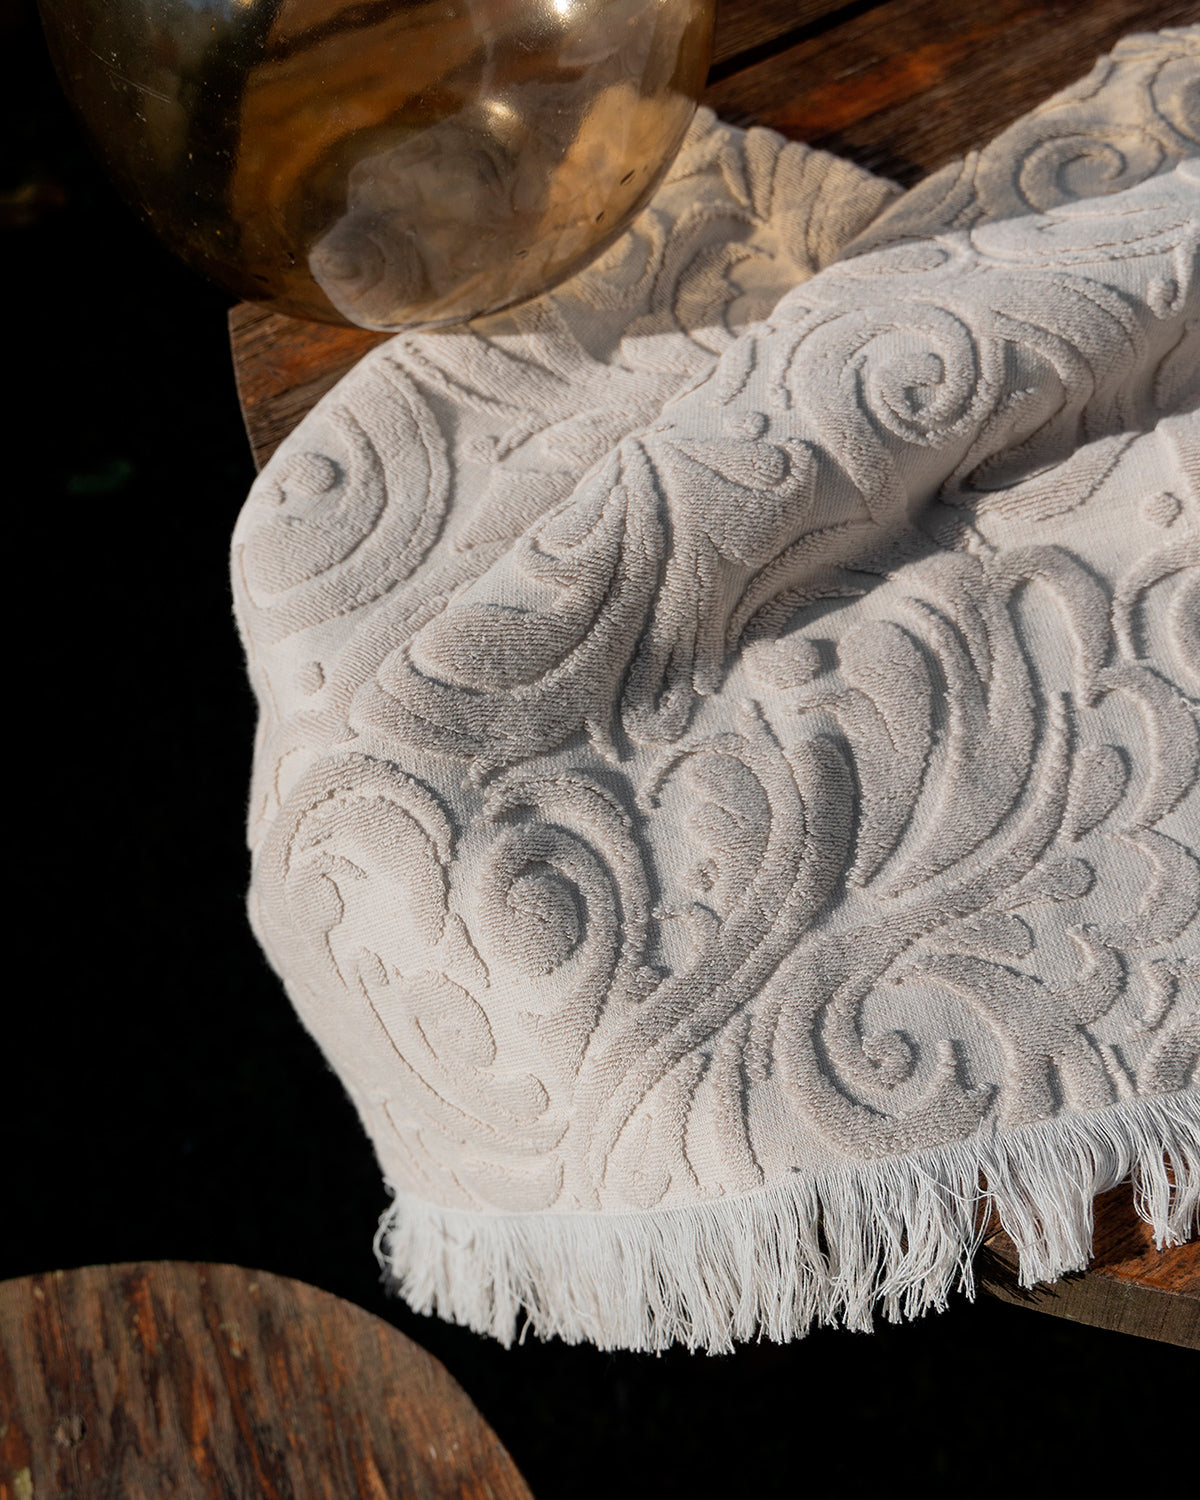 Harmony premium cotton bath towel in elegant beige, offering luxurious comfort and style.